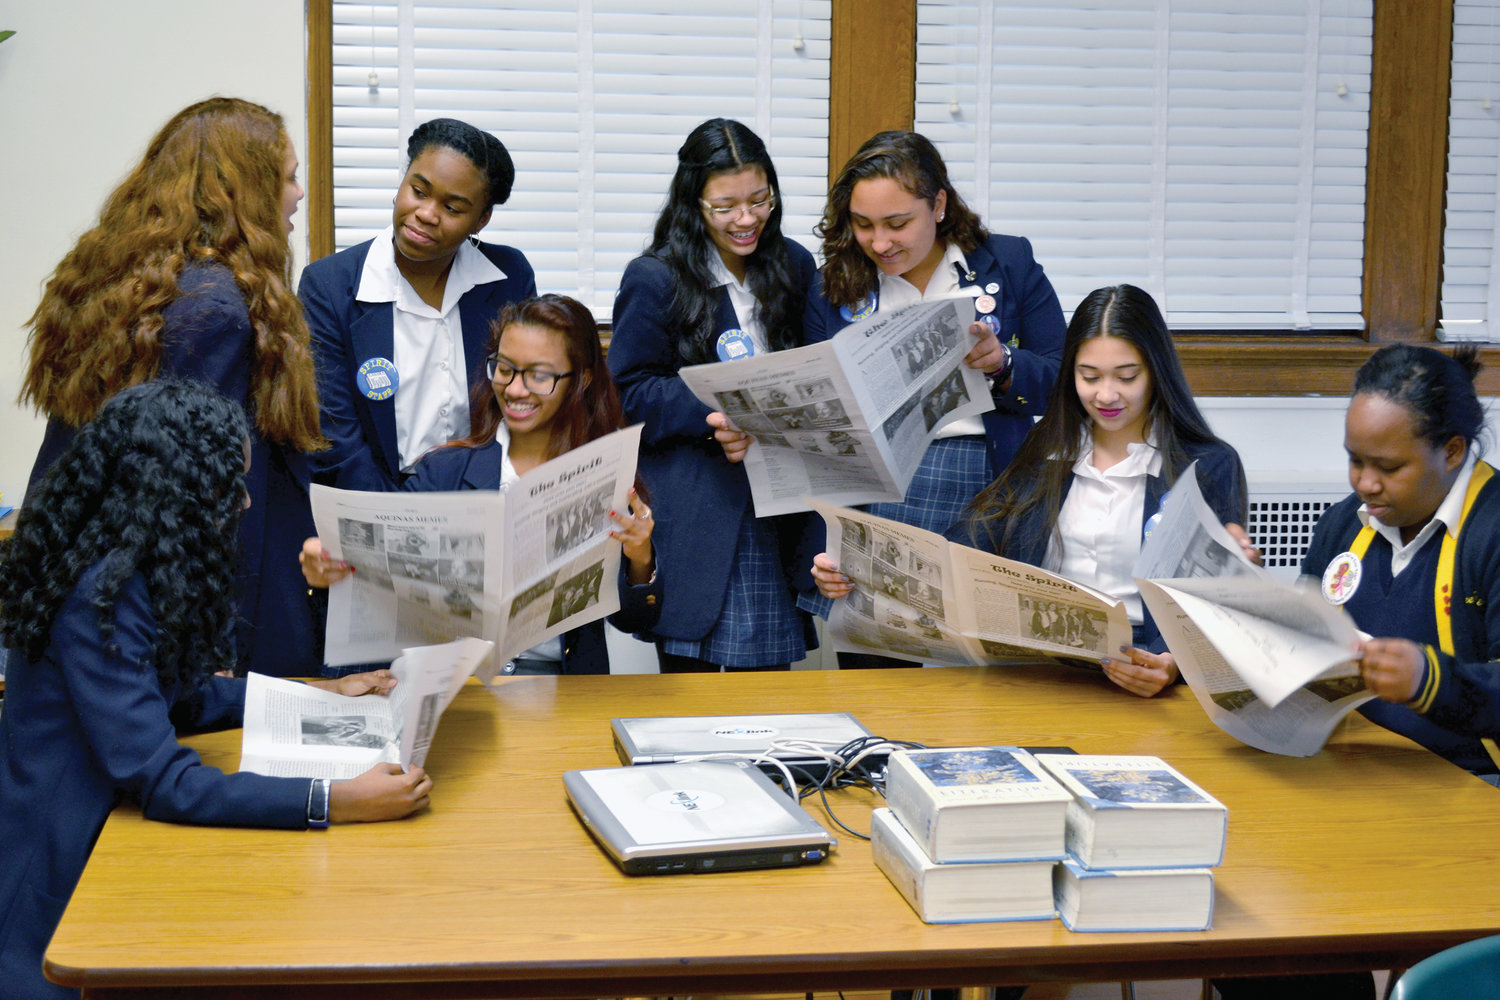 Students read The Spirit, the school newspaper.